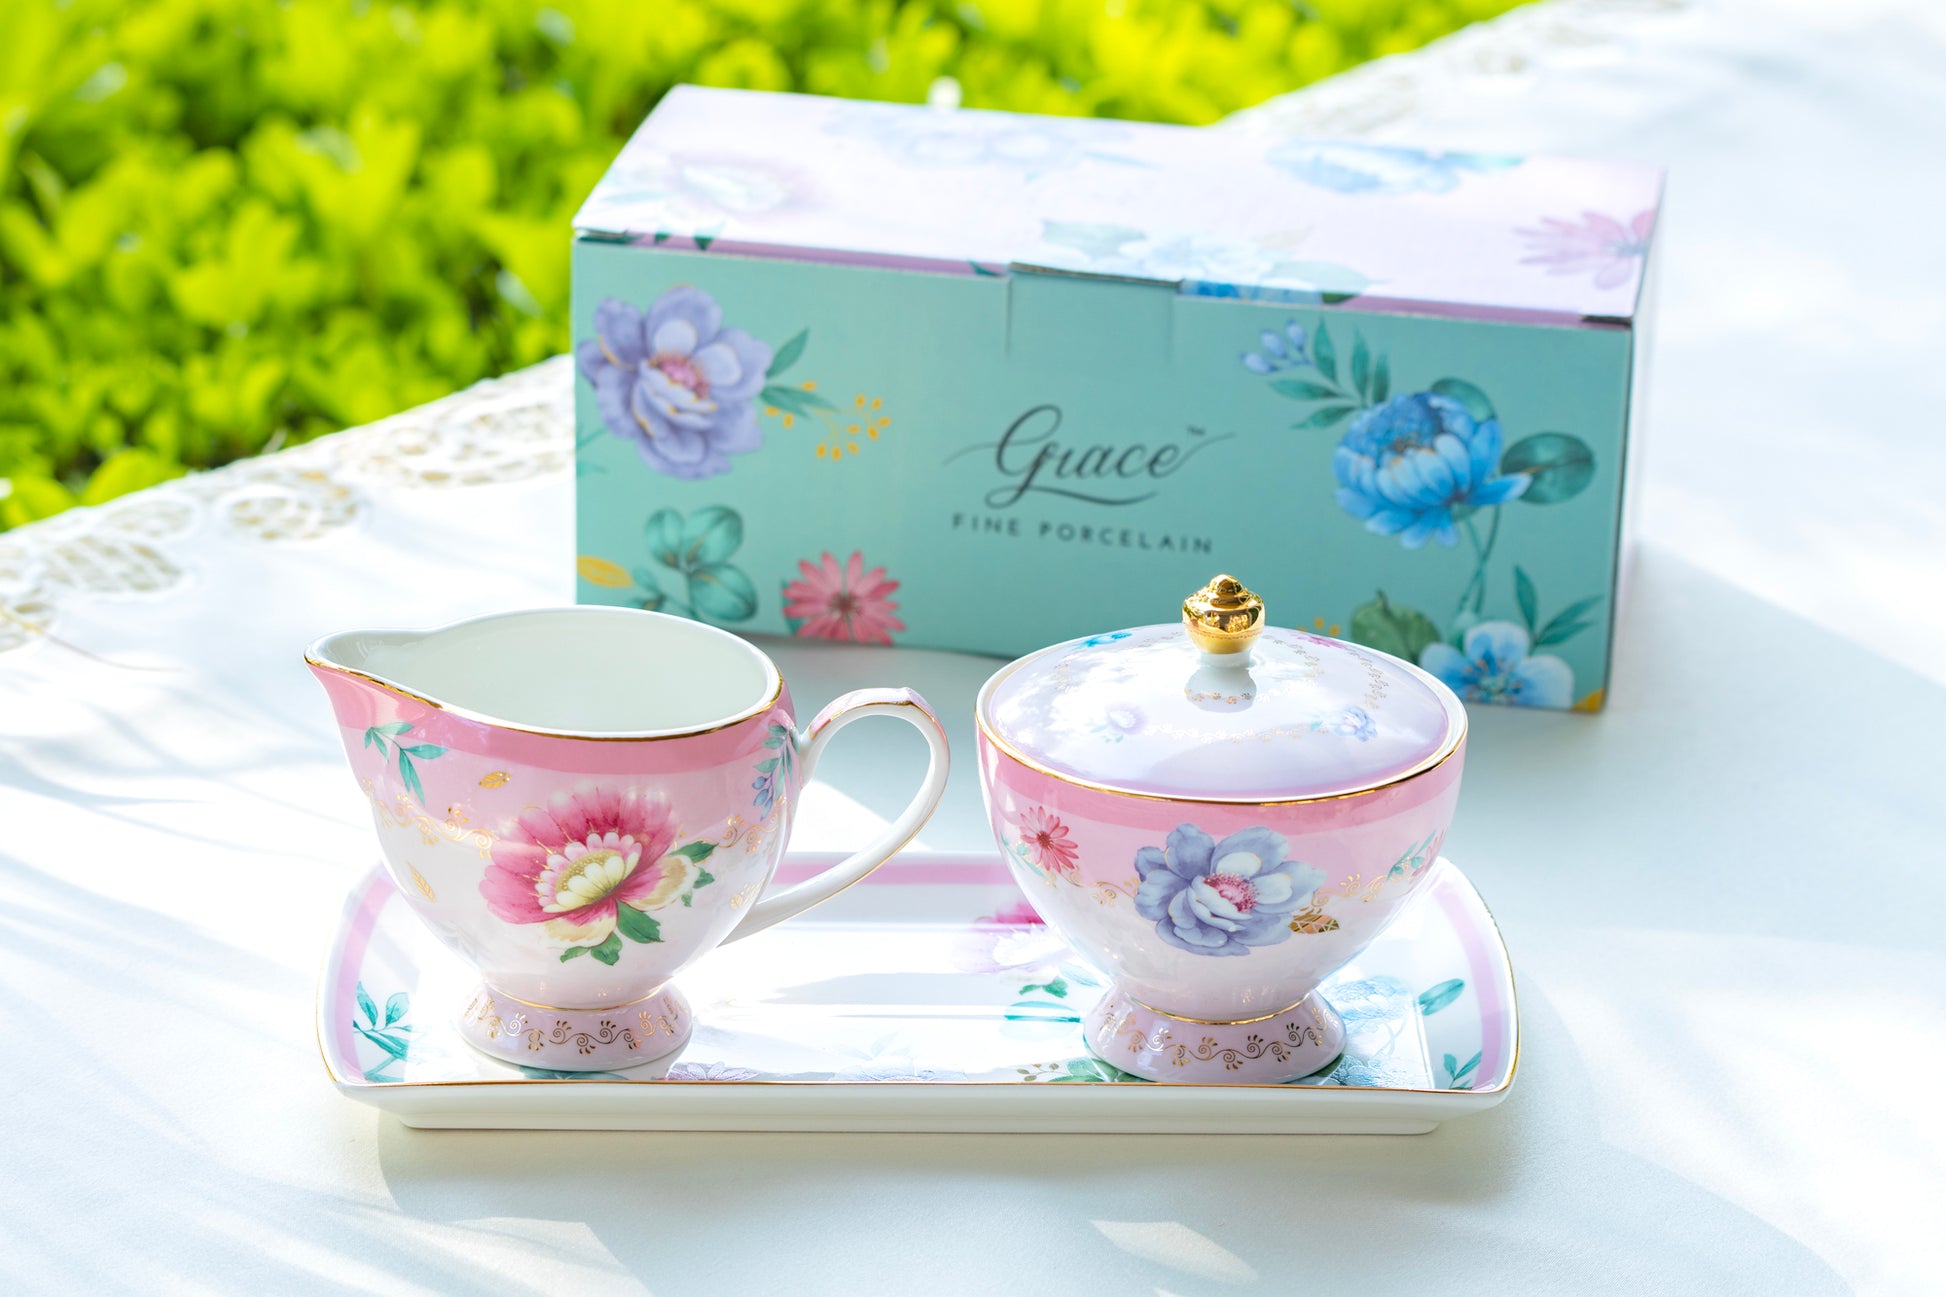 Grace Teaware Gift Boxed Pink Flower Garden Fine Porcelain Sugar Creamer & Serving Tray Set